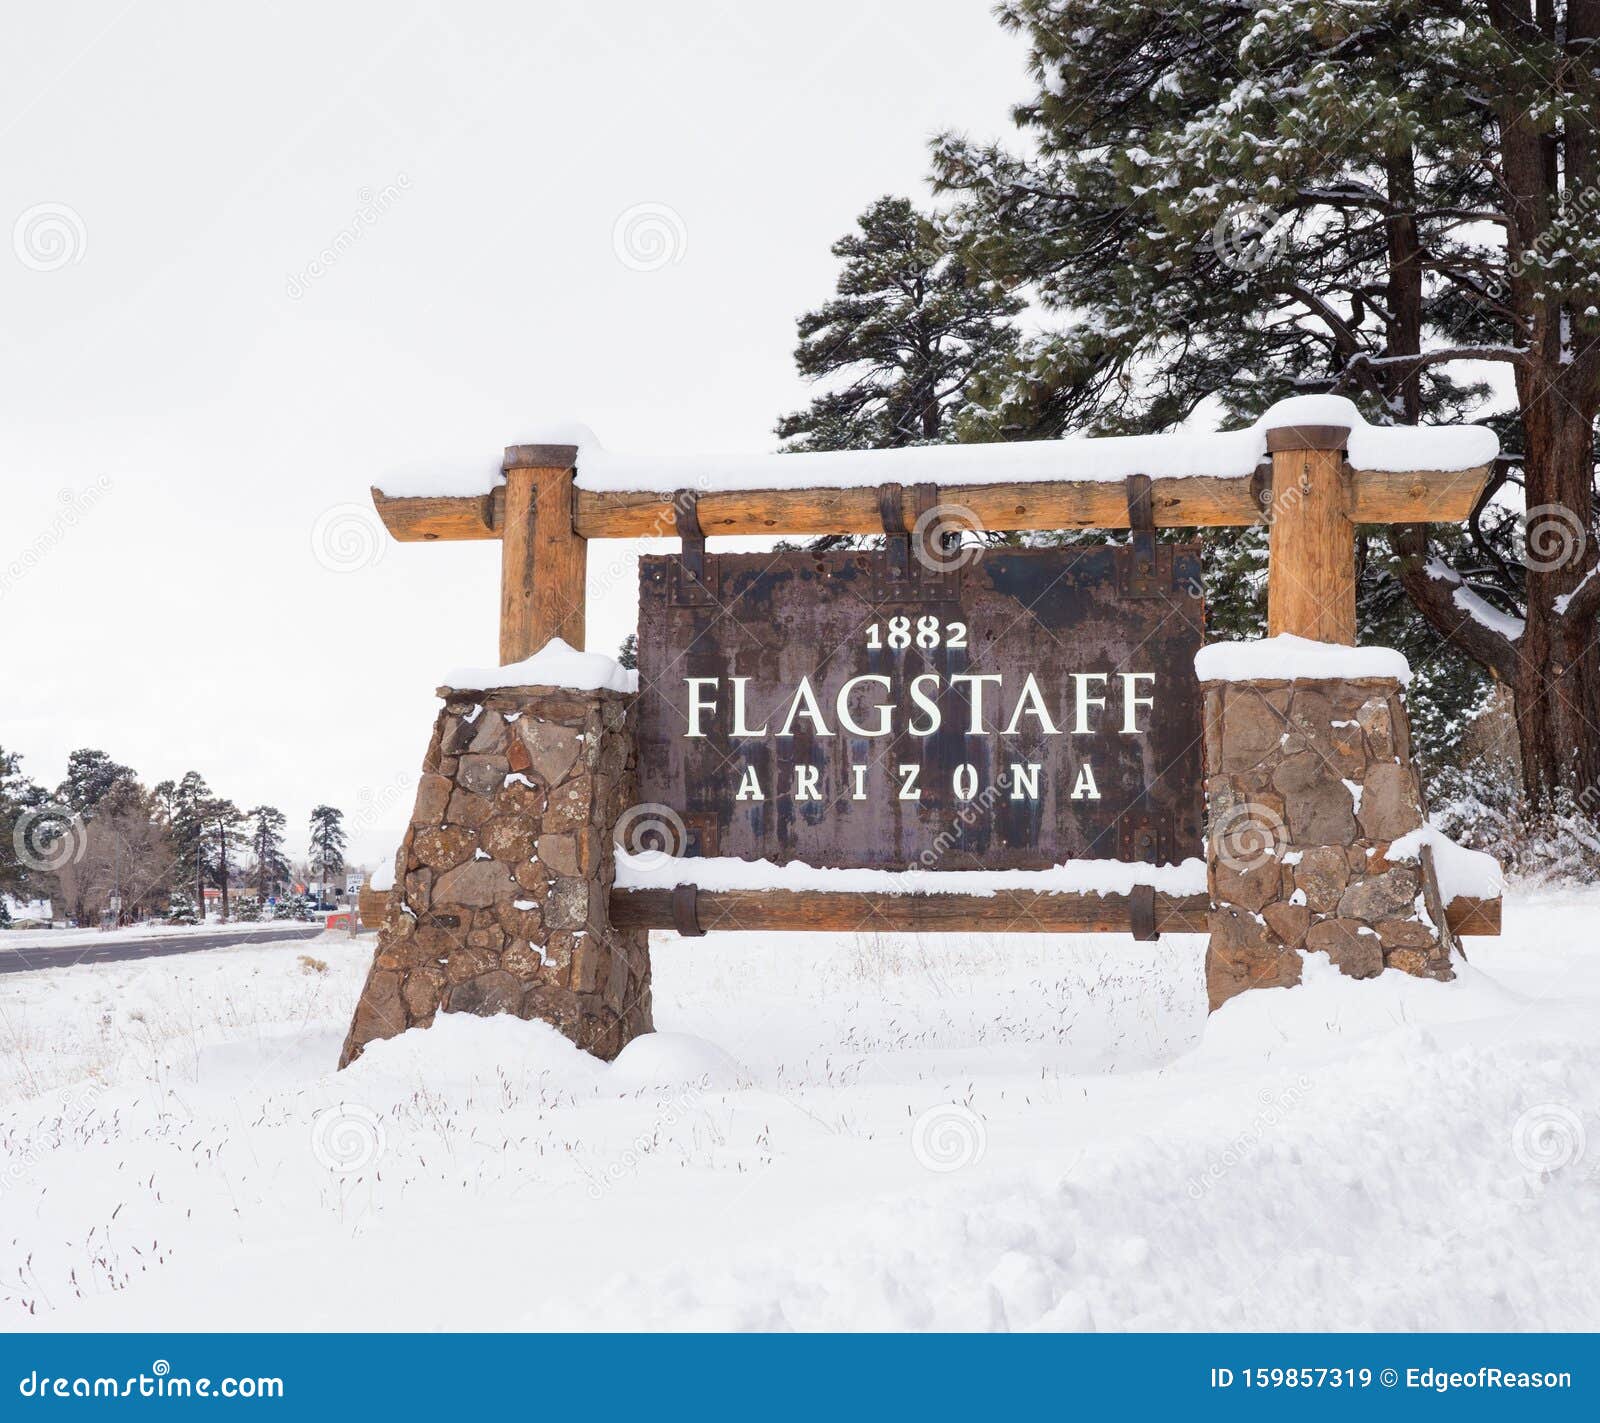 flagstaff arizona sign in winter